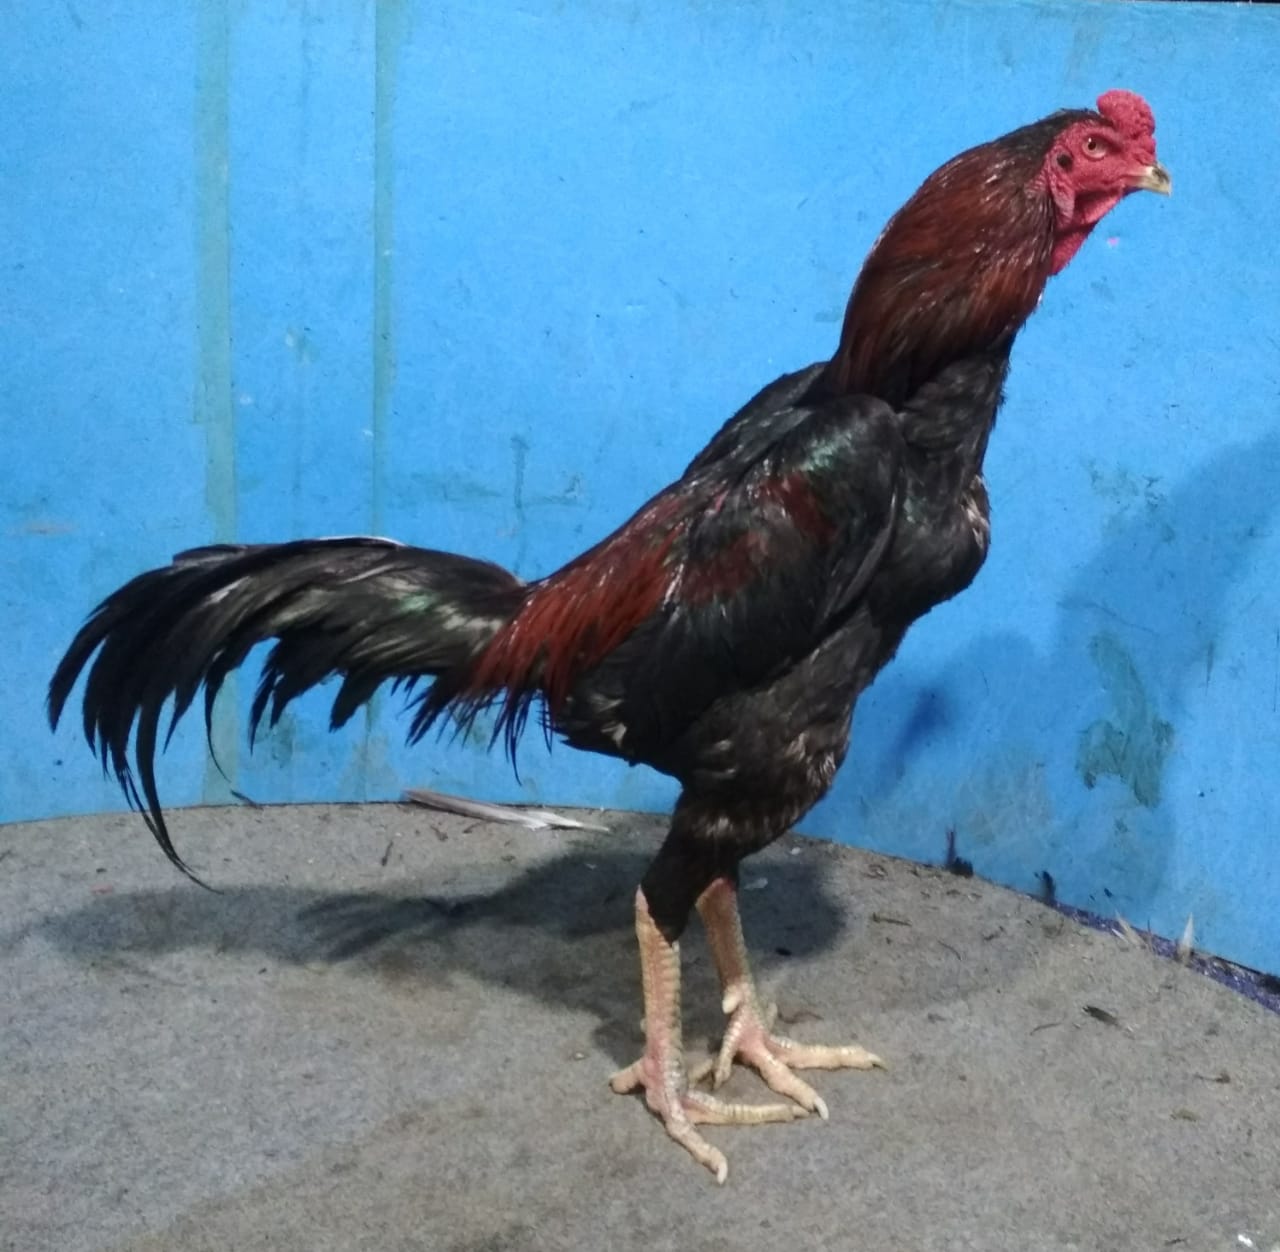 3 Pacek Ayam Bangkok Ukuran 9 Pukul Ko Jual Ayam Aduan 2021